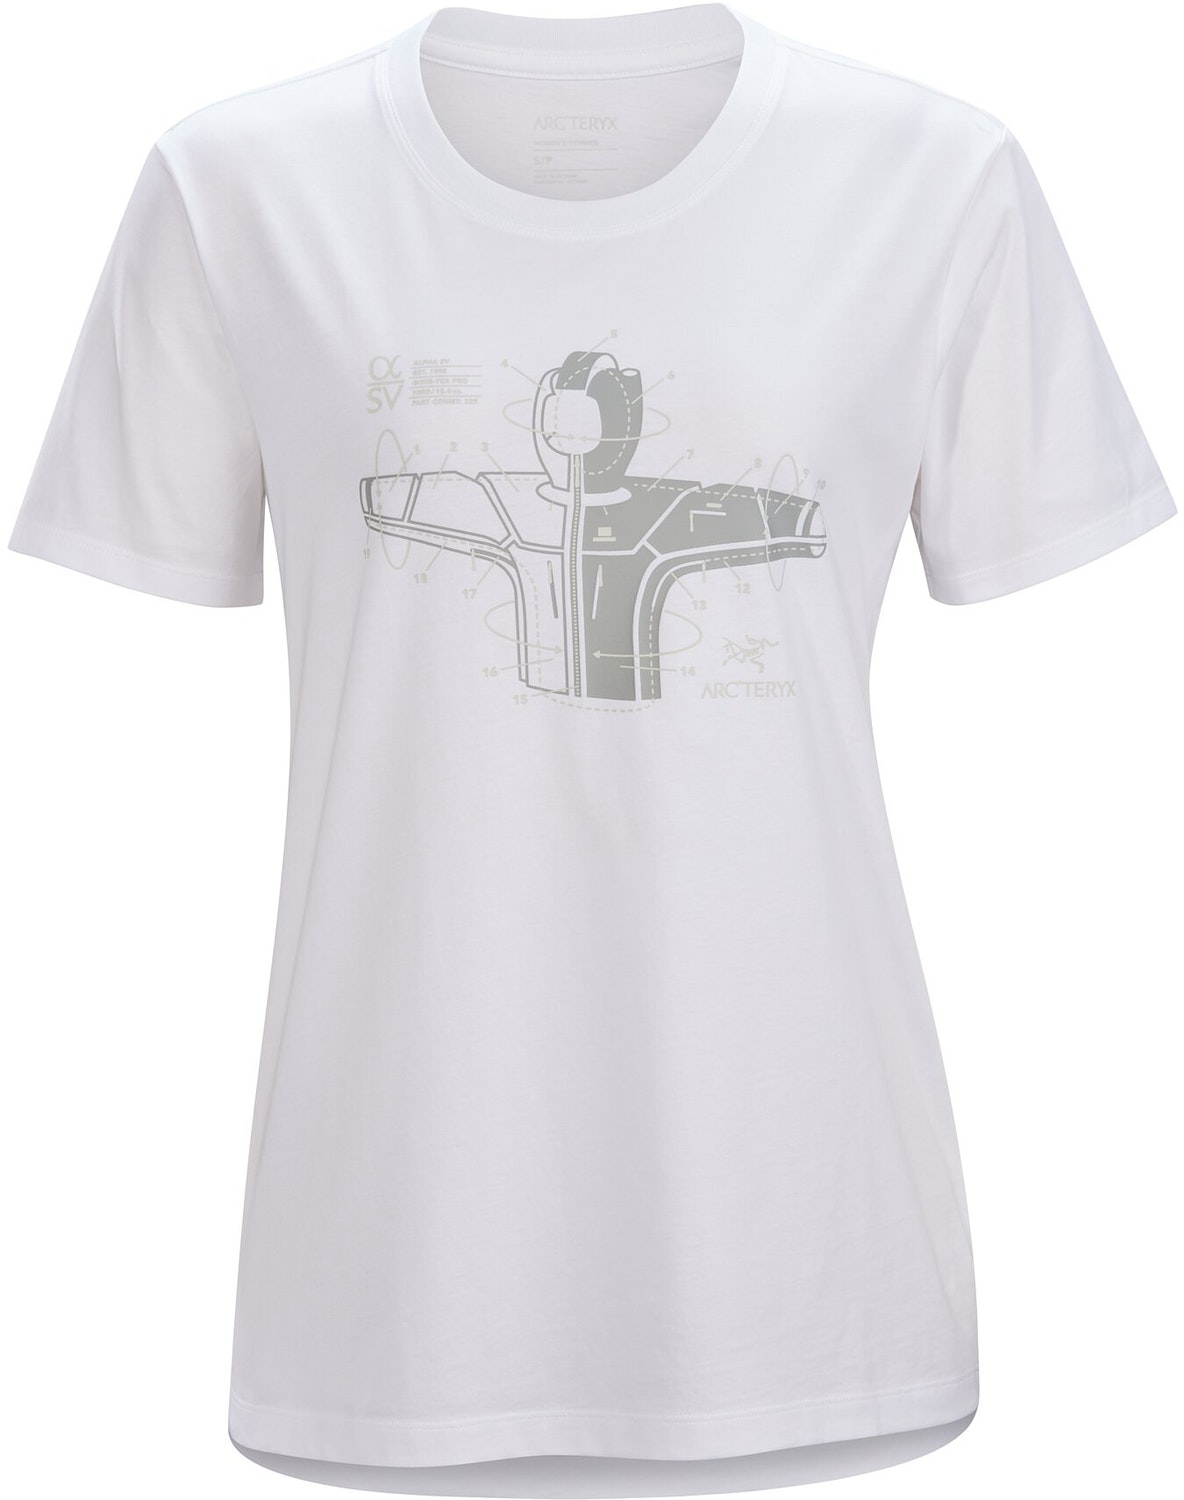 T-shirt Arc'teryx Arc'hive Donna Bianche - IT-333547